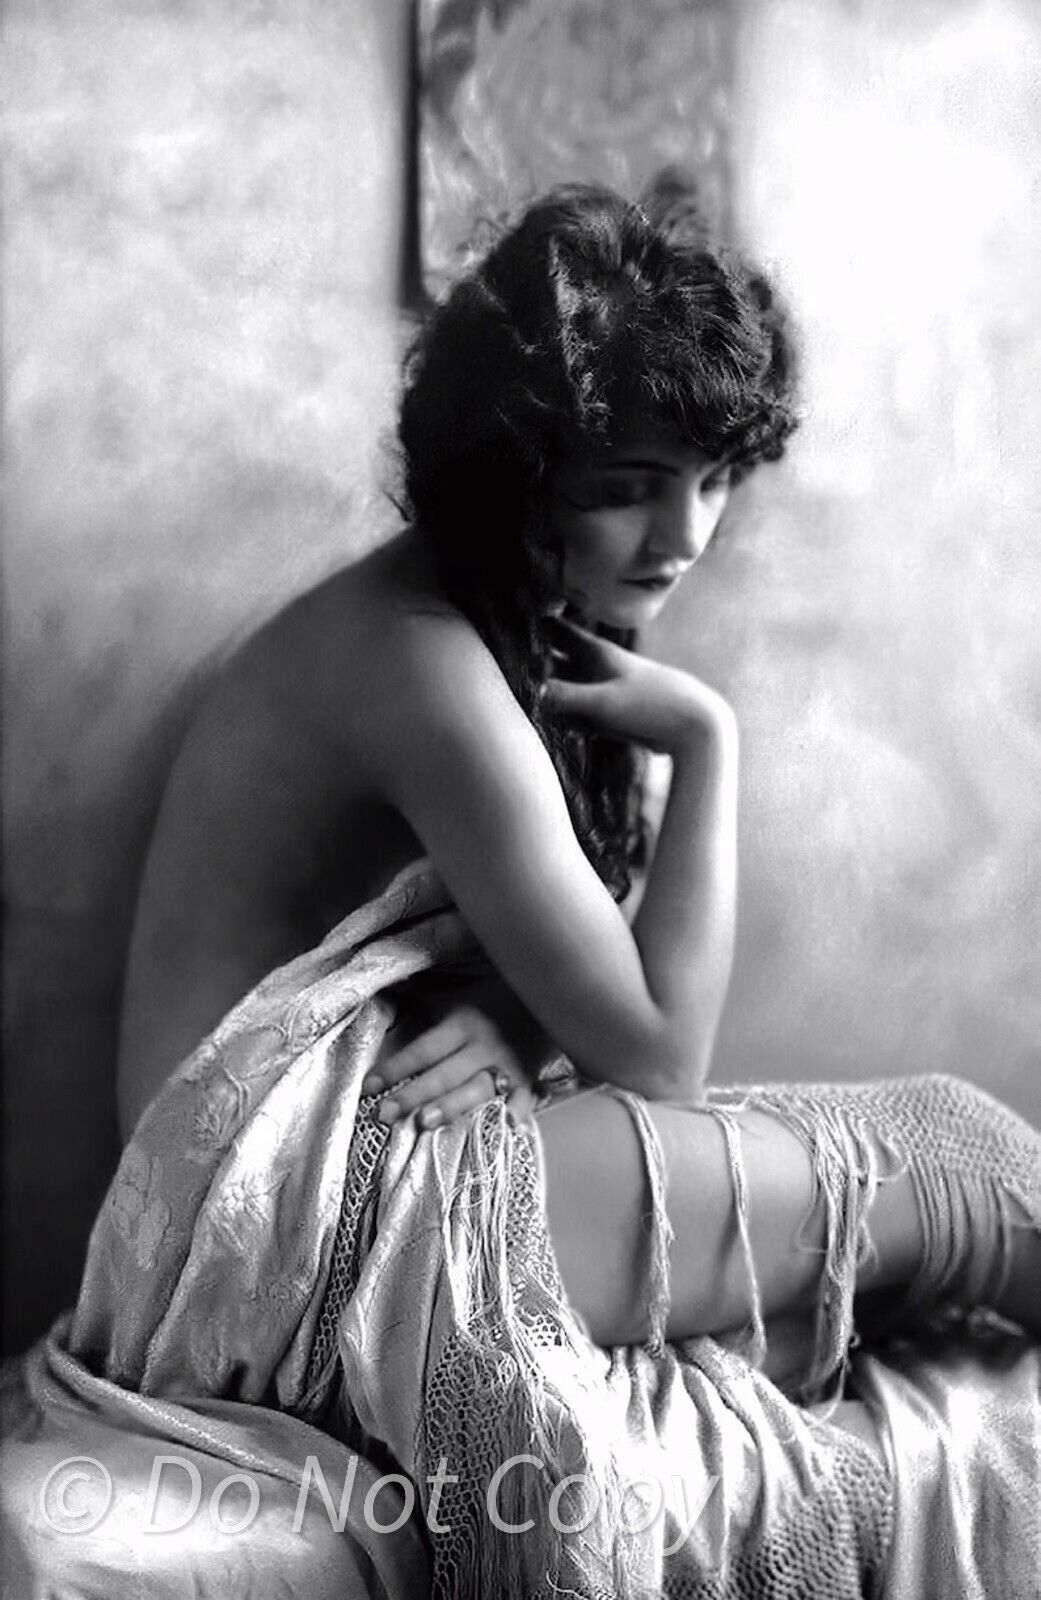 Ziegfeld Follies - Flapper Girl - Vintage 1920s PUBLICITY PHOTO